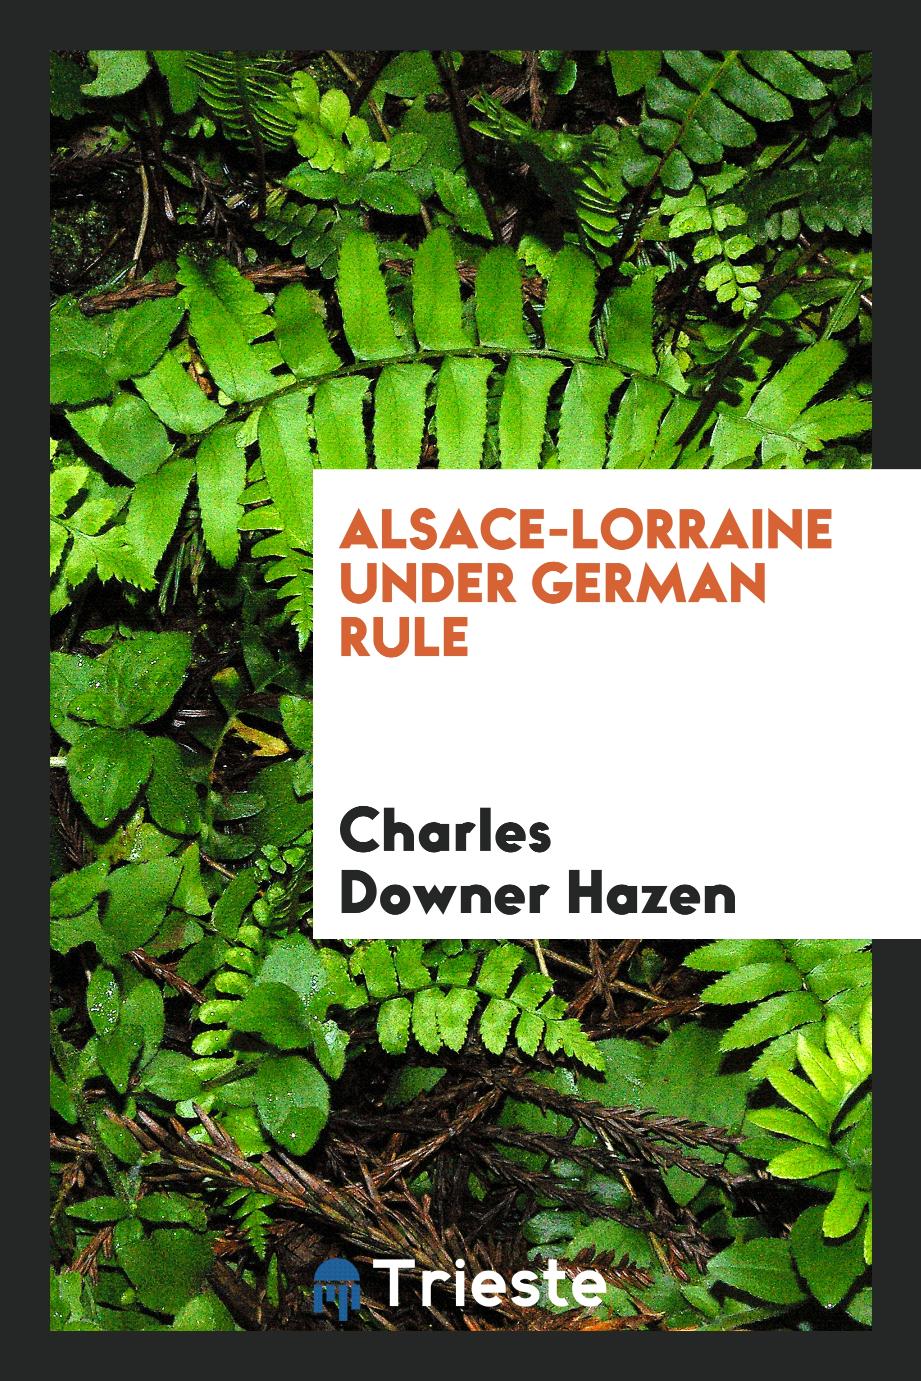 Alsace-Lorraine under German rule